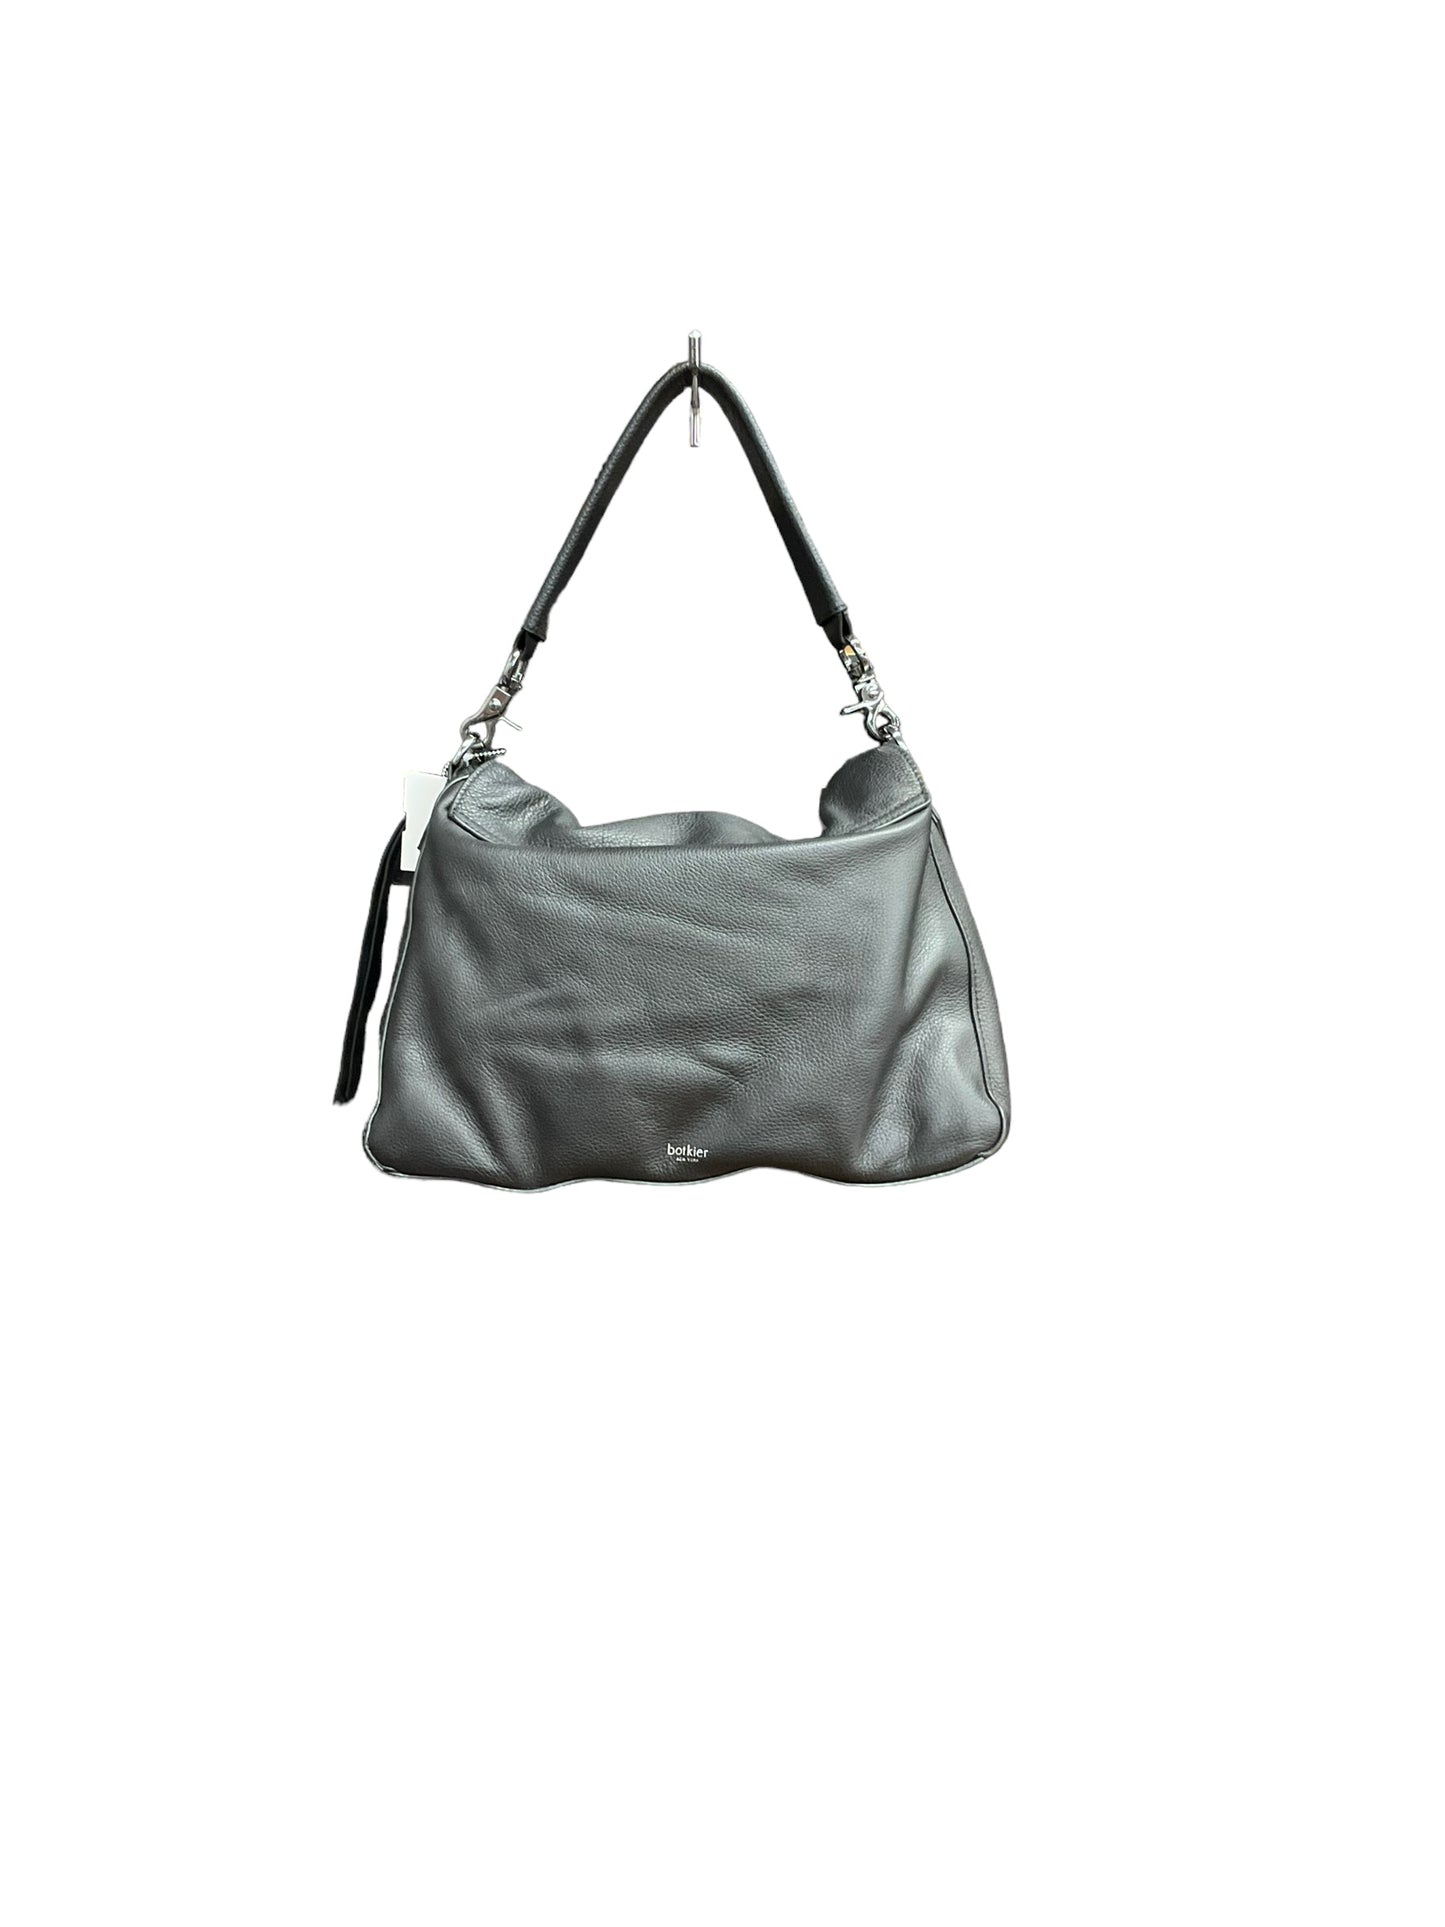 Handbag By Botkier  Size: Large